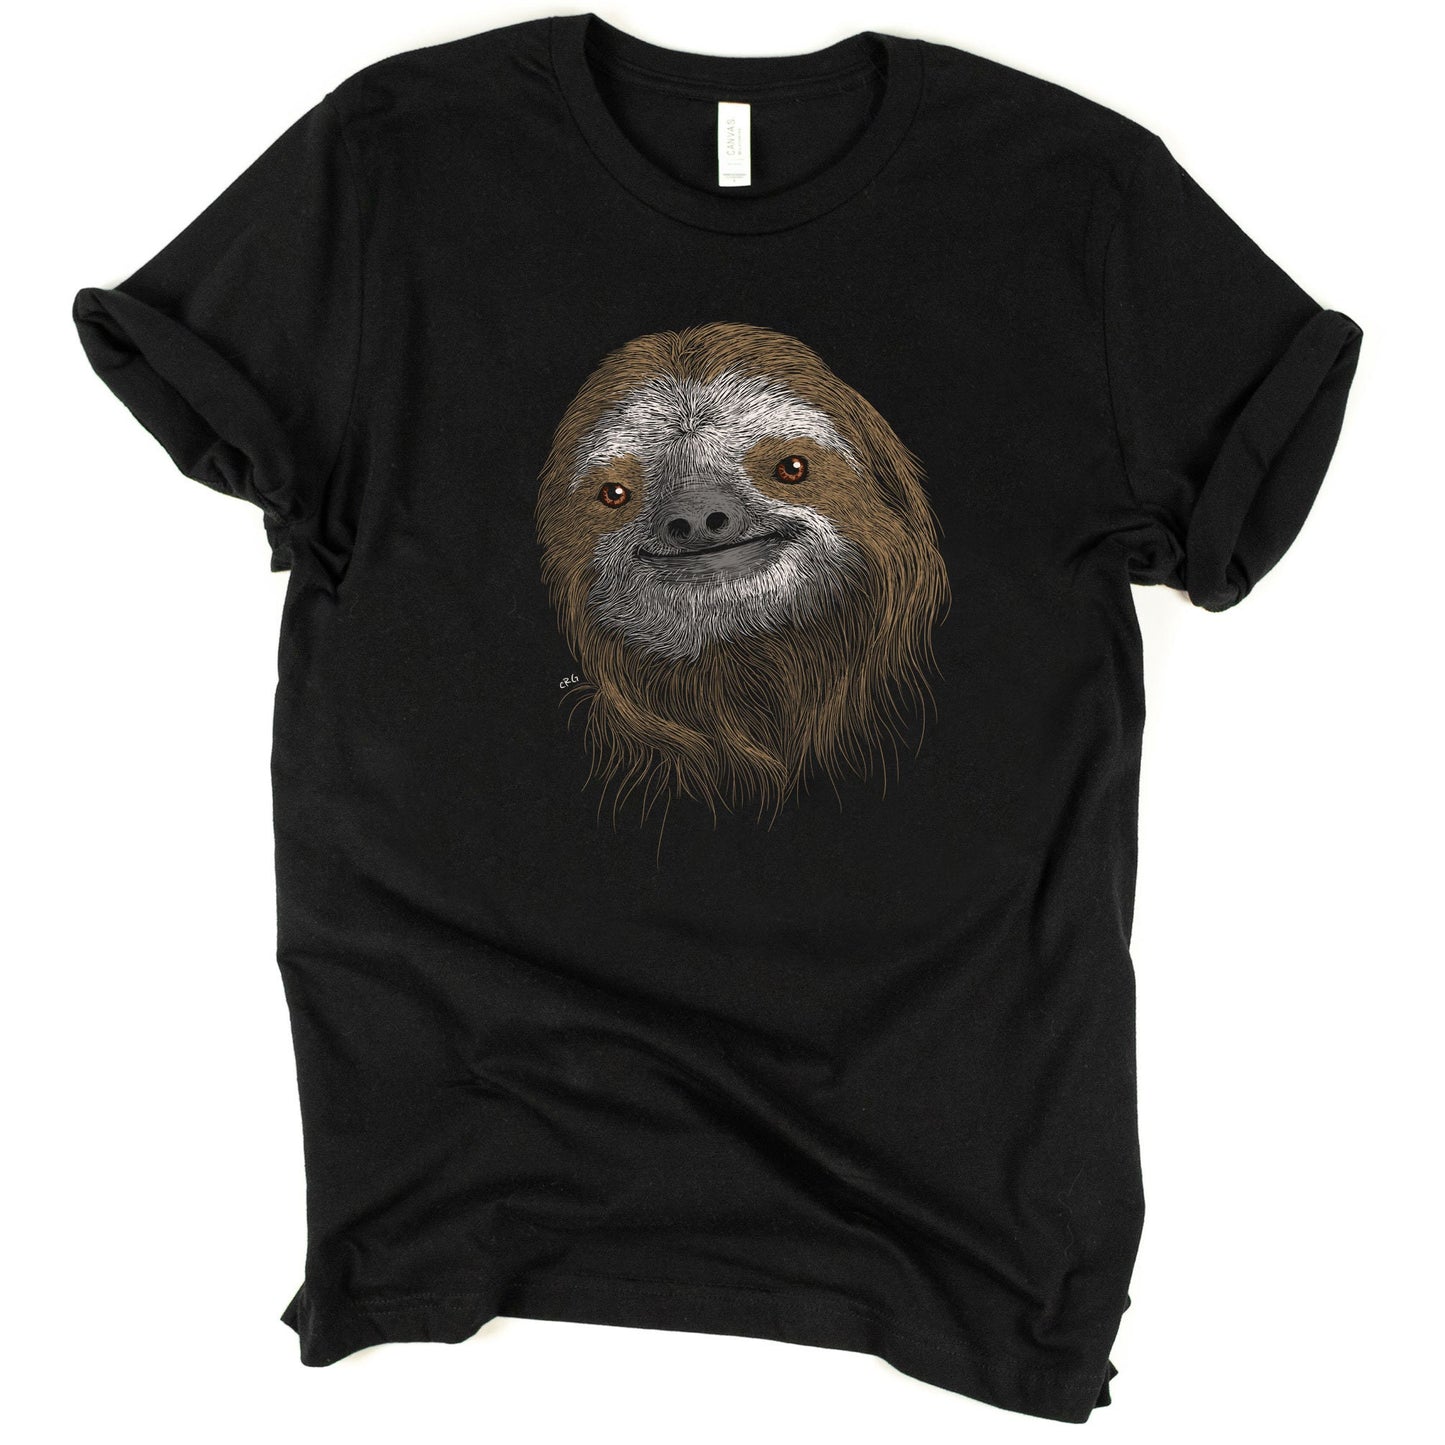 Sloth Shirt